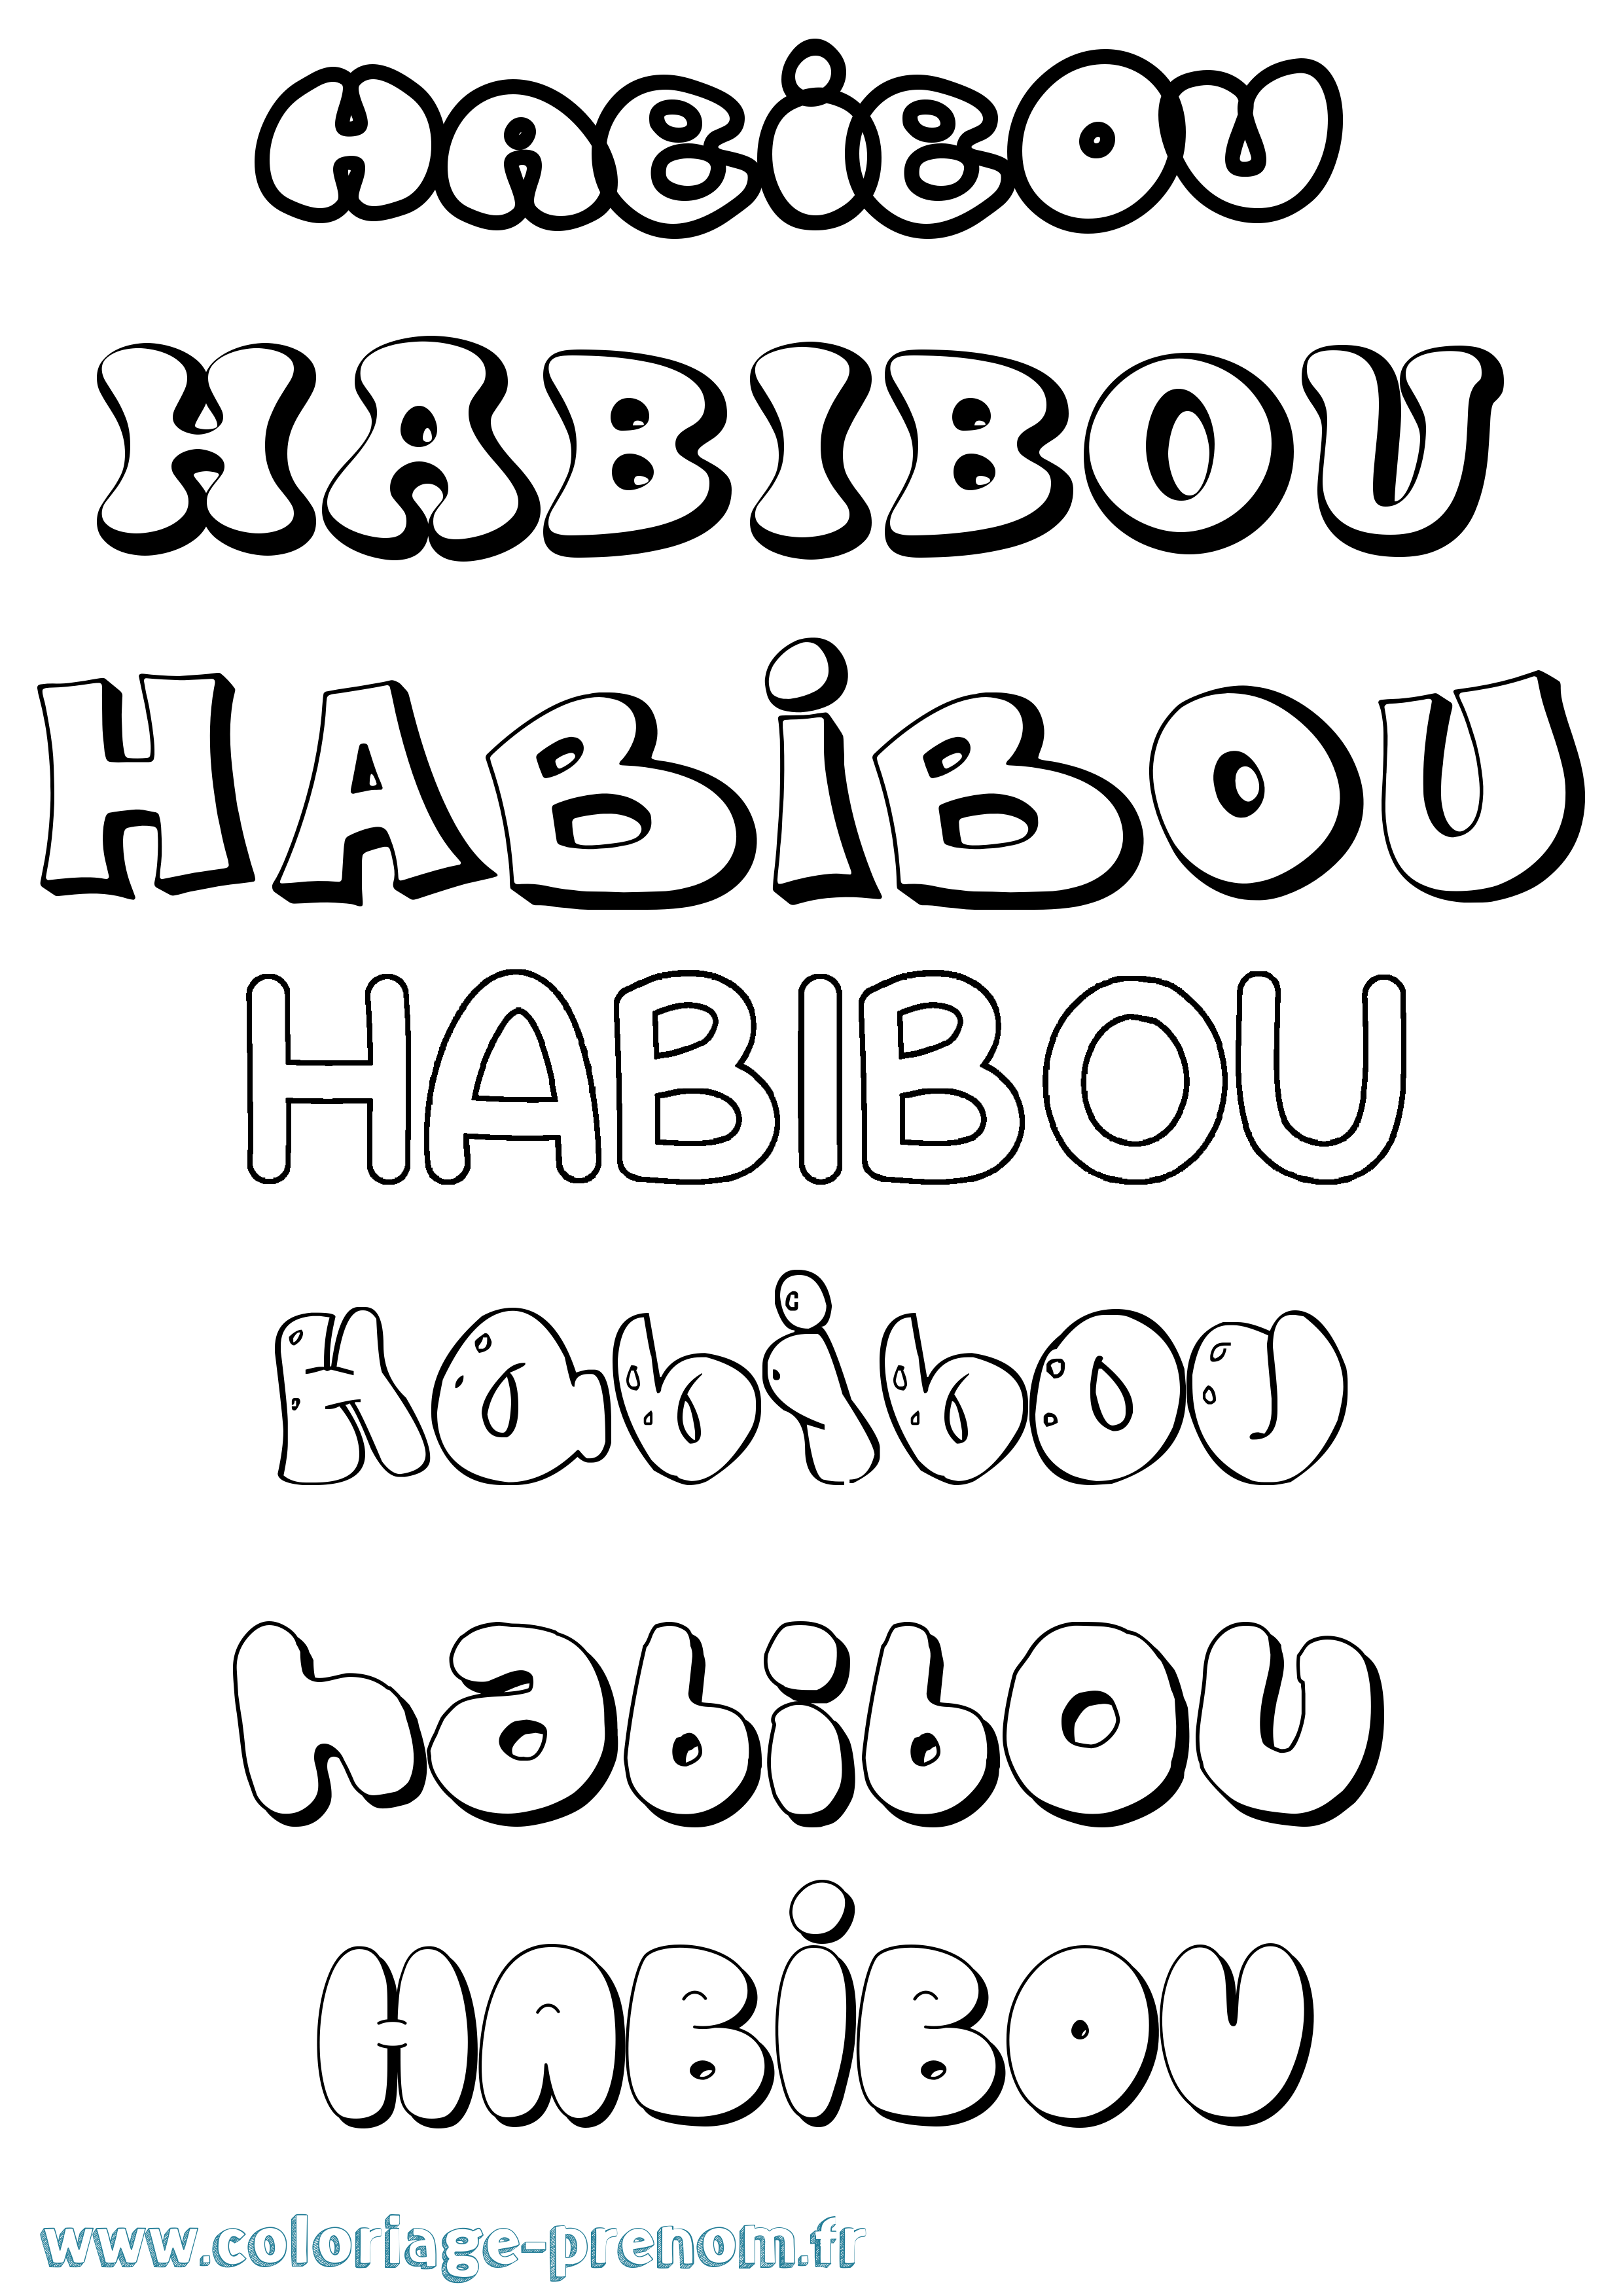 Coloriage prénom Habibou Bubble